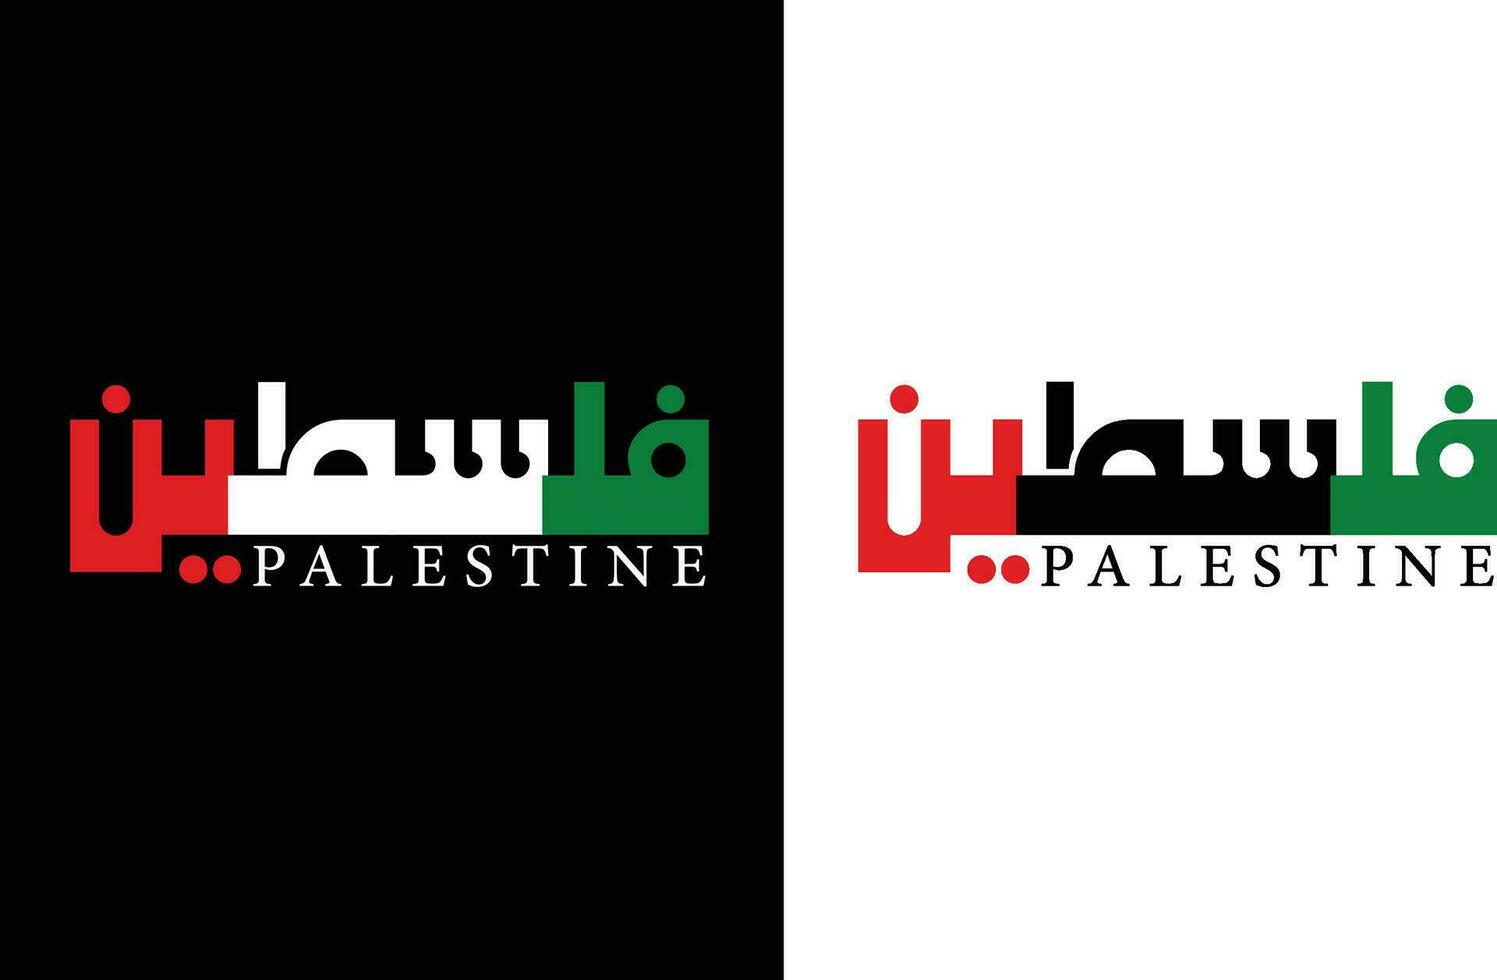 Palestine Arabic Calligraphy Vector Design - Palestine Text Logo